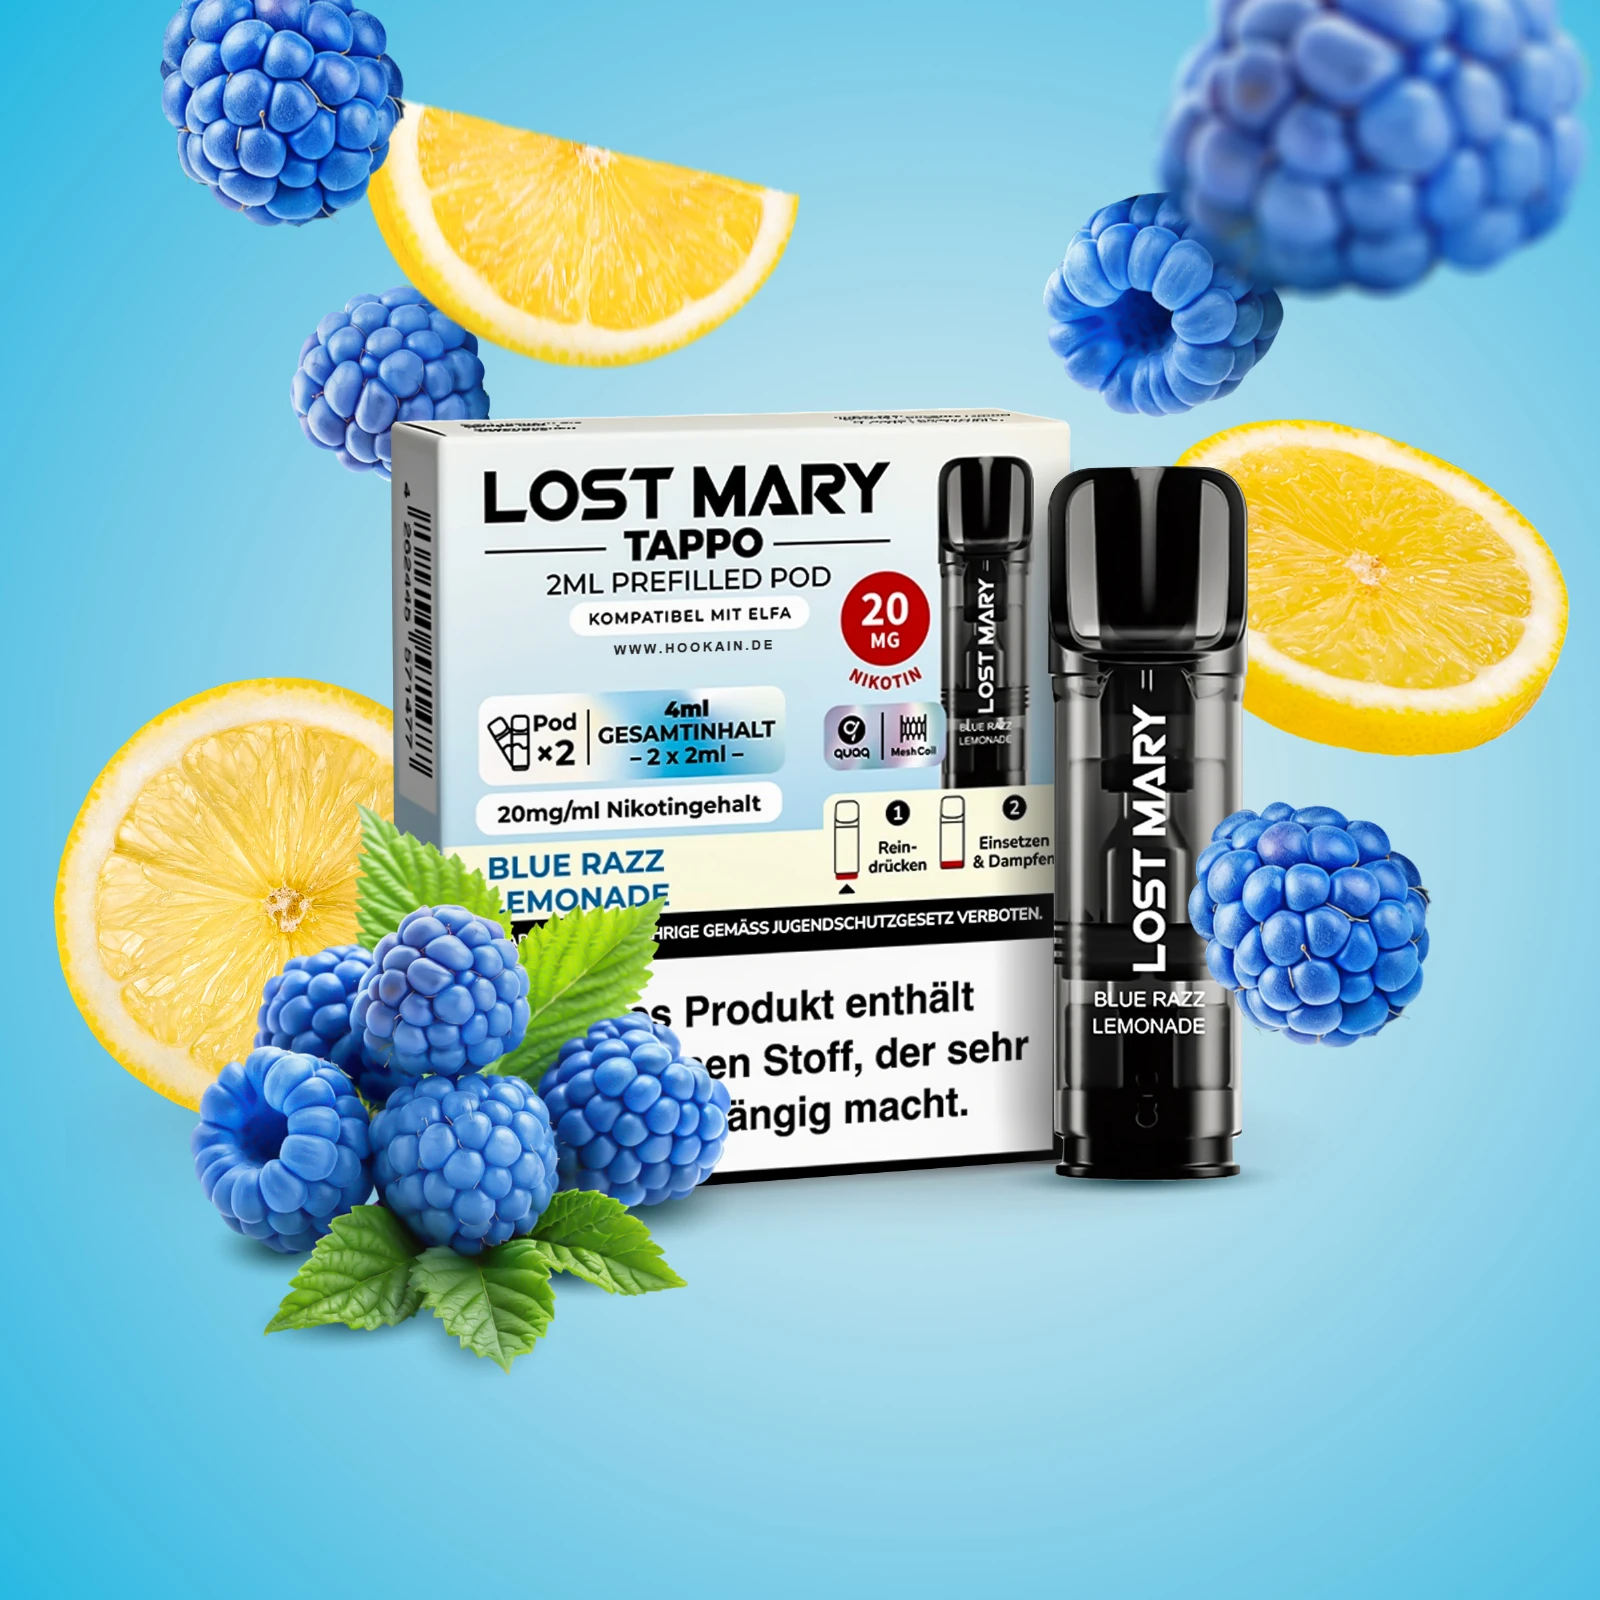 Lost Mary Tappo Blue Razz Lemonade : Umweltfreundliches Pod-System mit Prefilled Pods